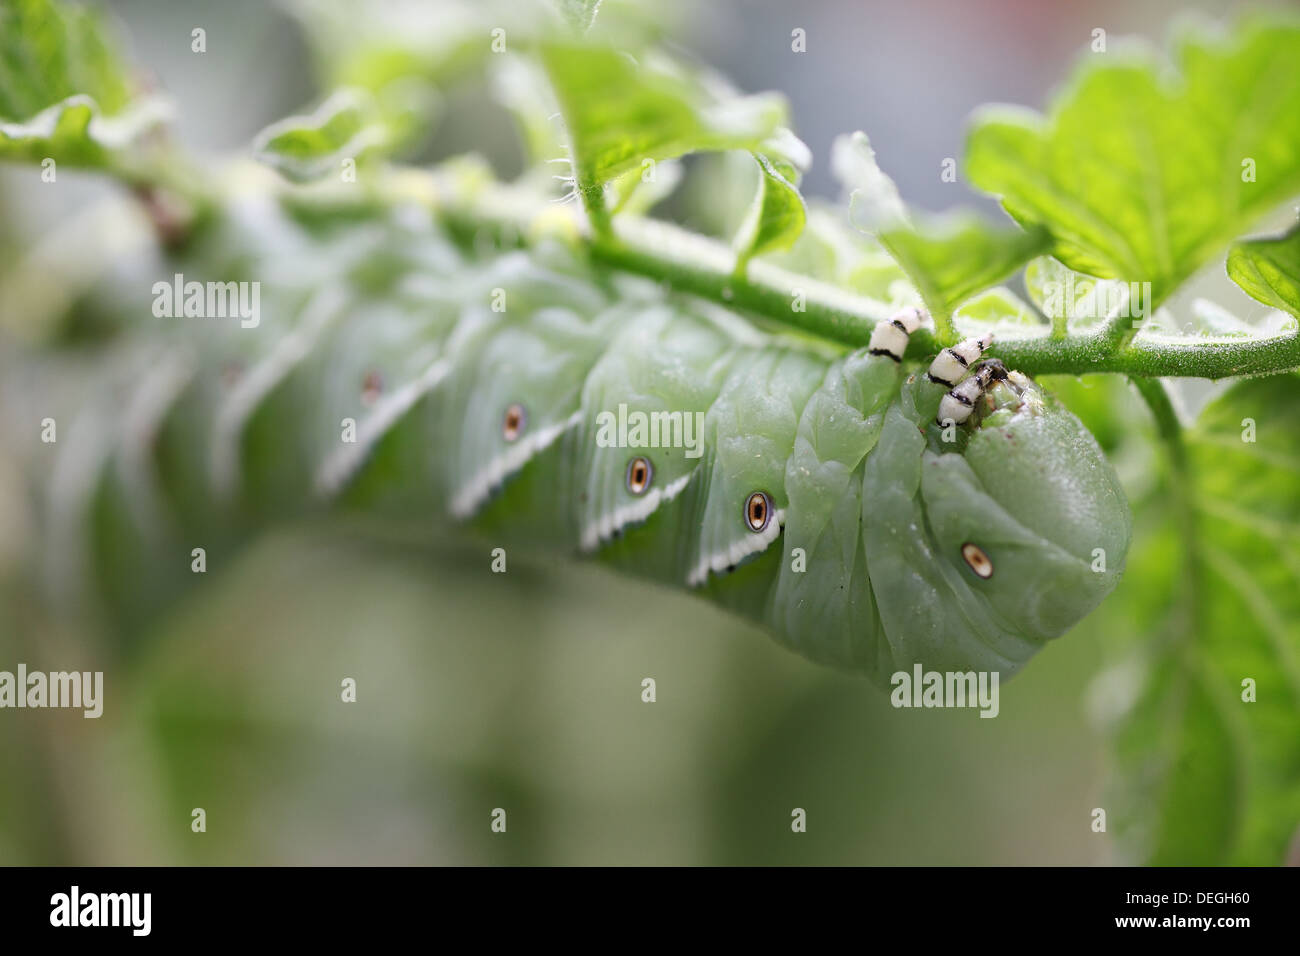 Caterpillar pest en una planta de tomate Foto de stock